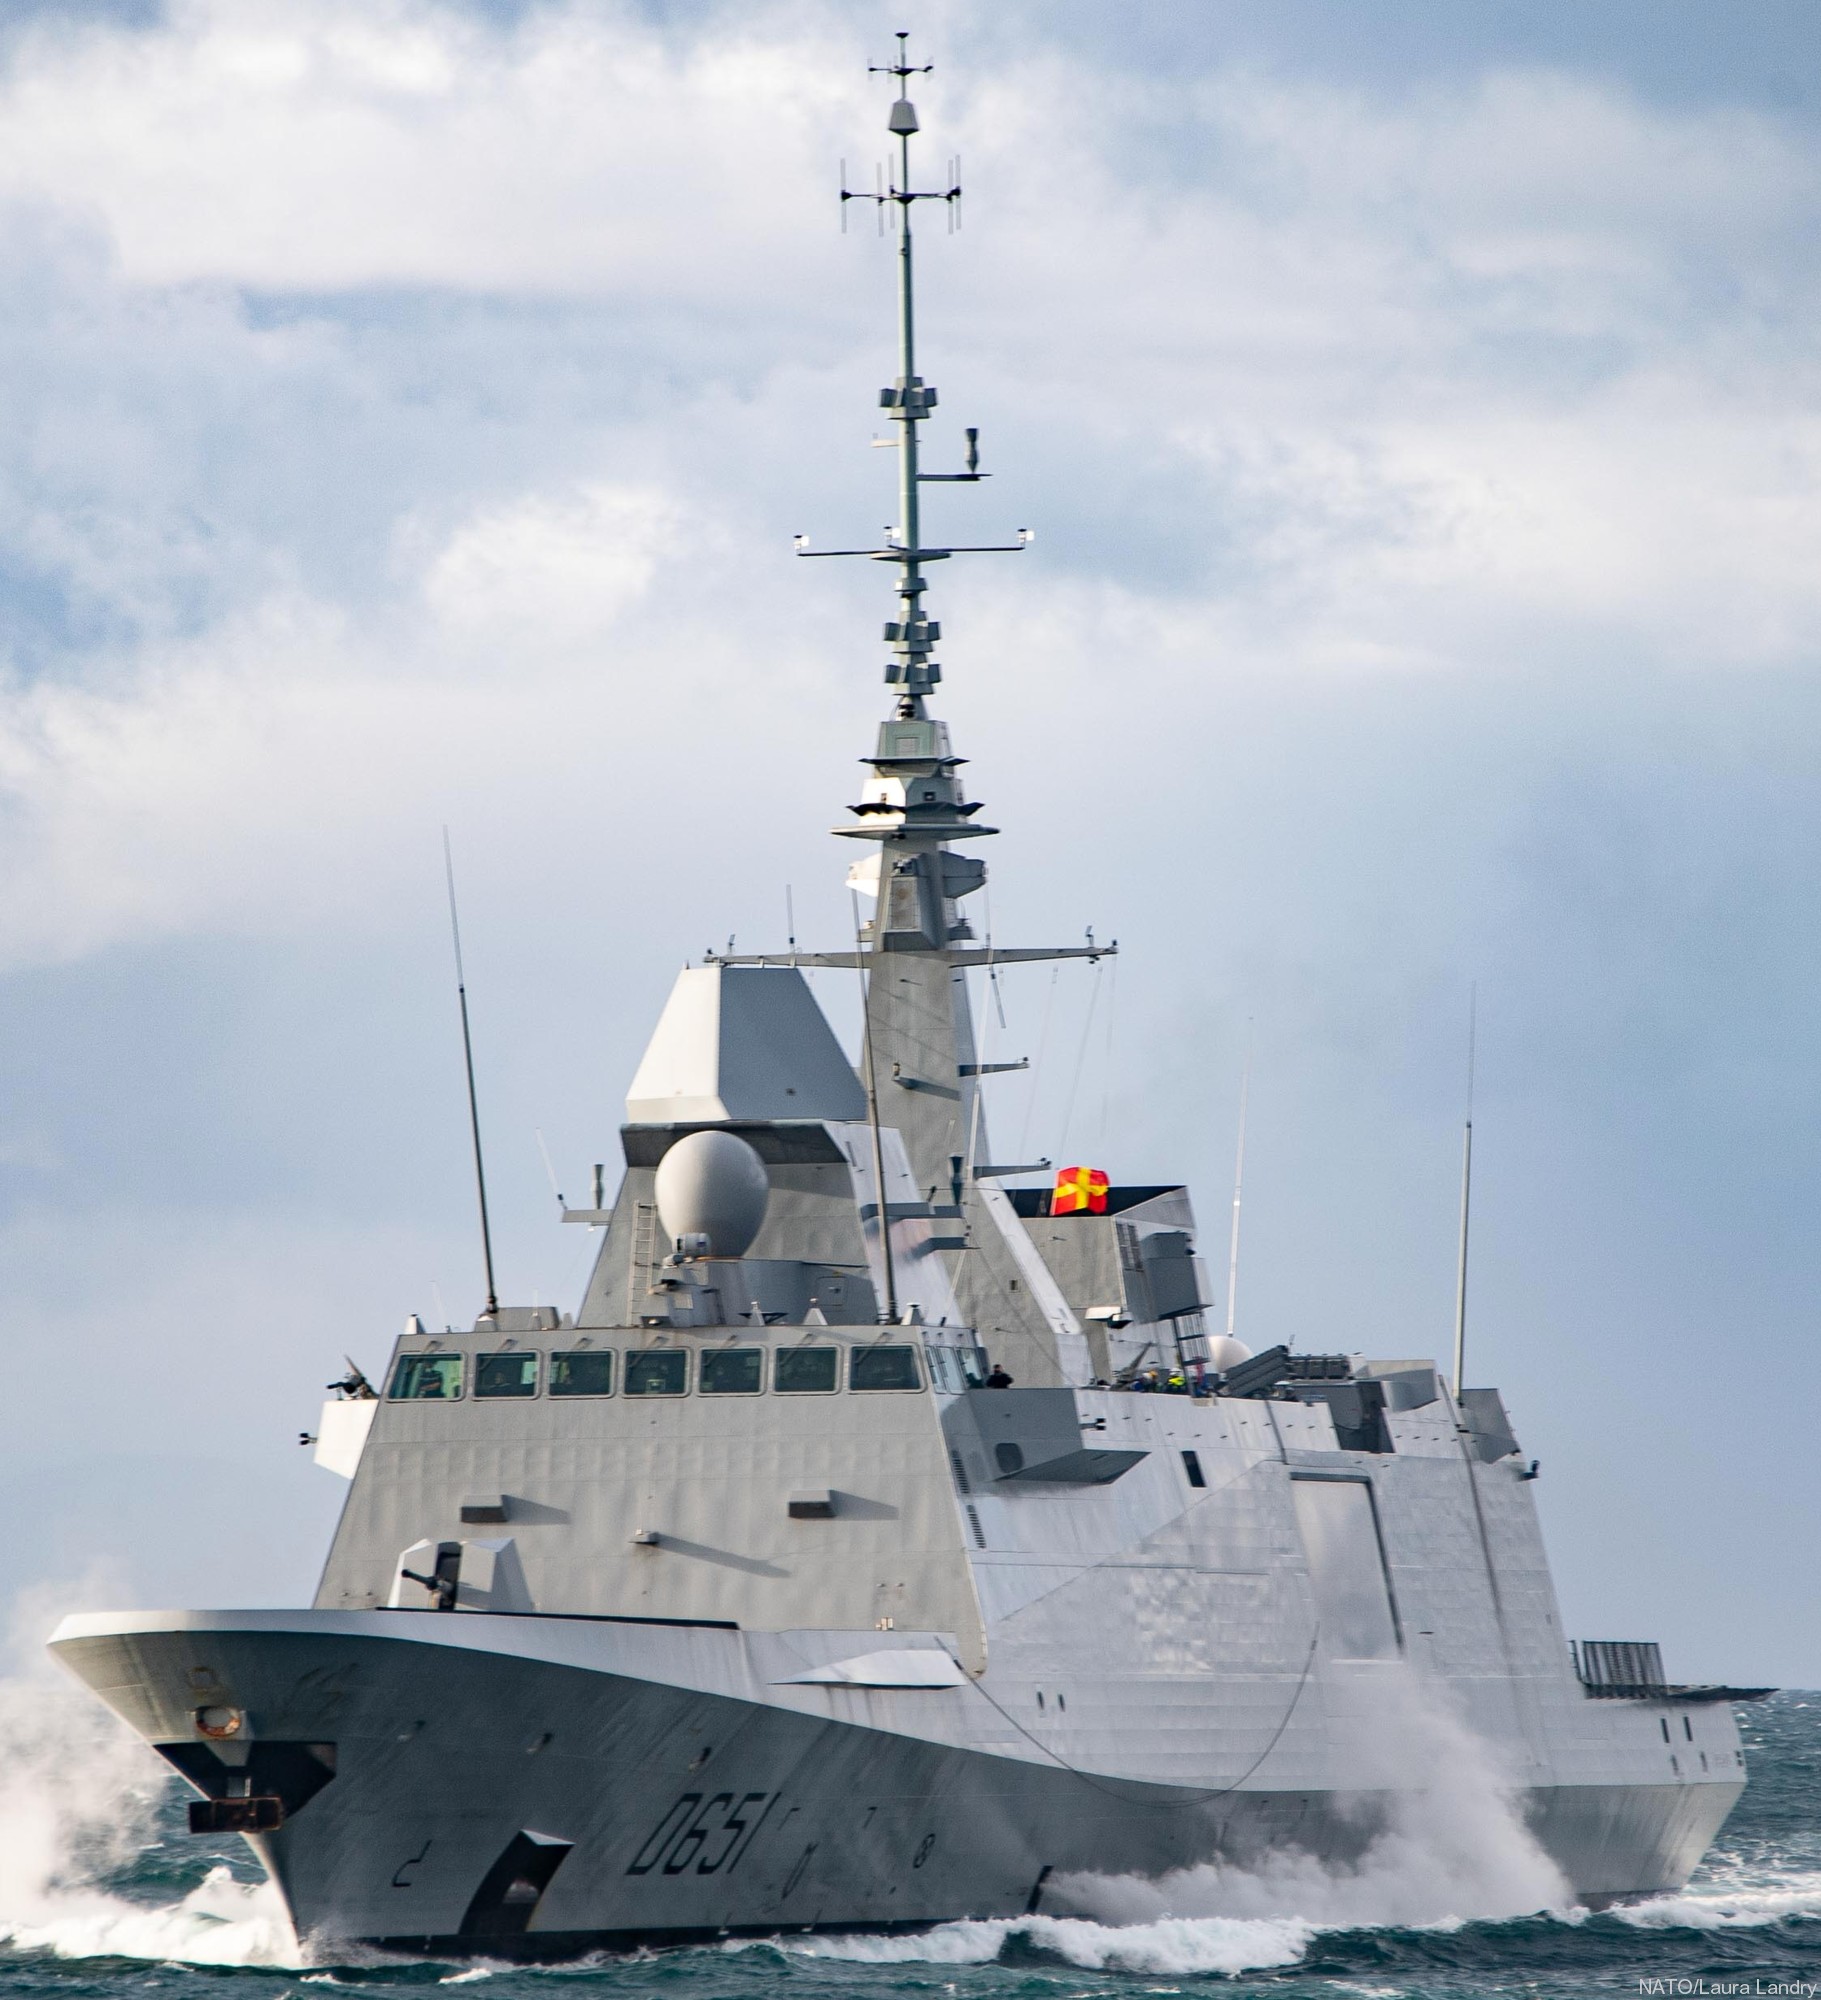 d-651 fs normandie fremm aquitaine class frigate fregate multi purpose french navy marine nationale 14